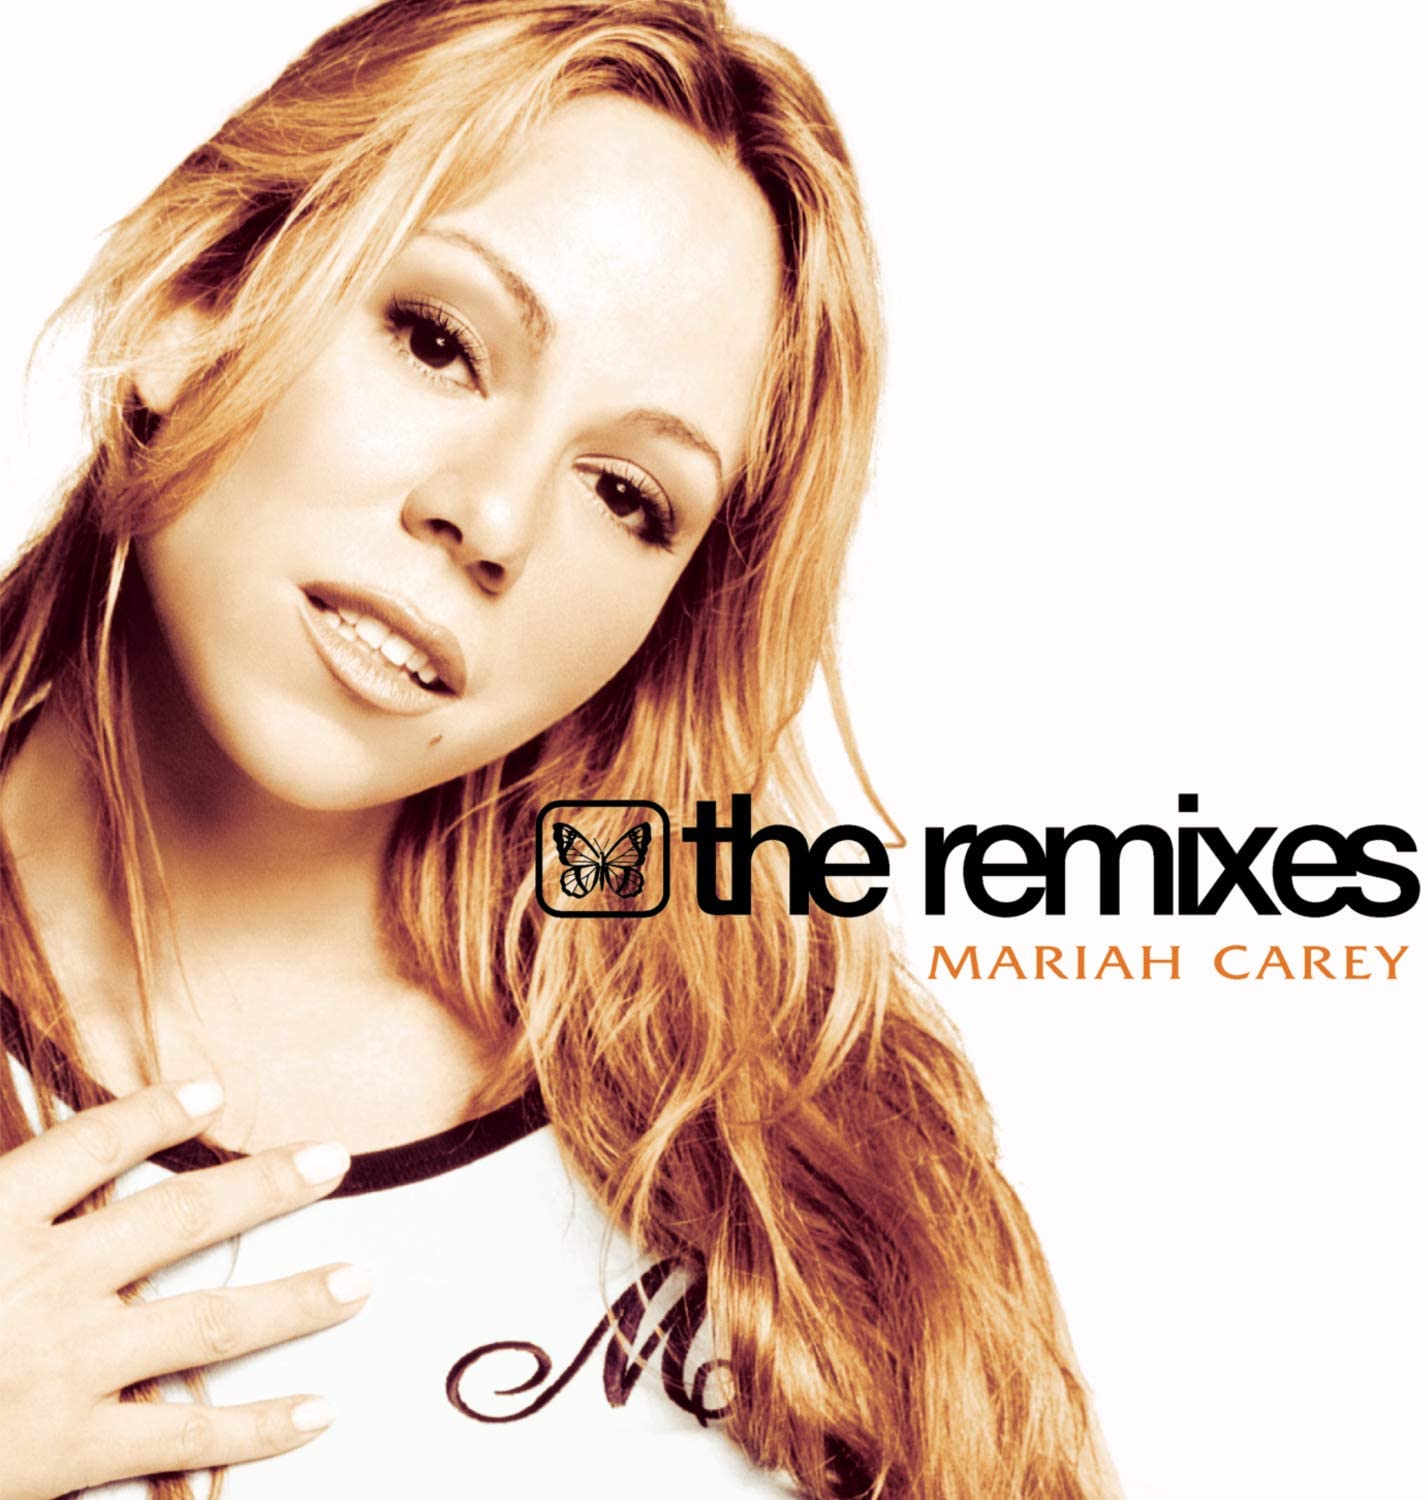 Mariah Carey é a rainha pop dos remixes, diz revista